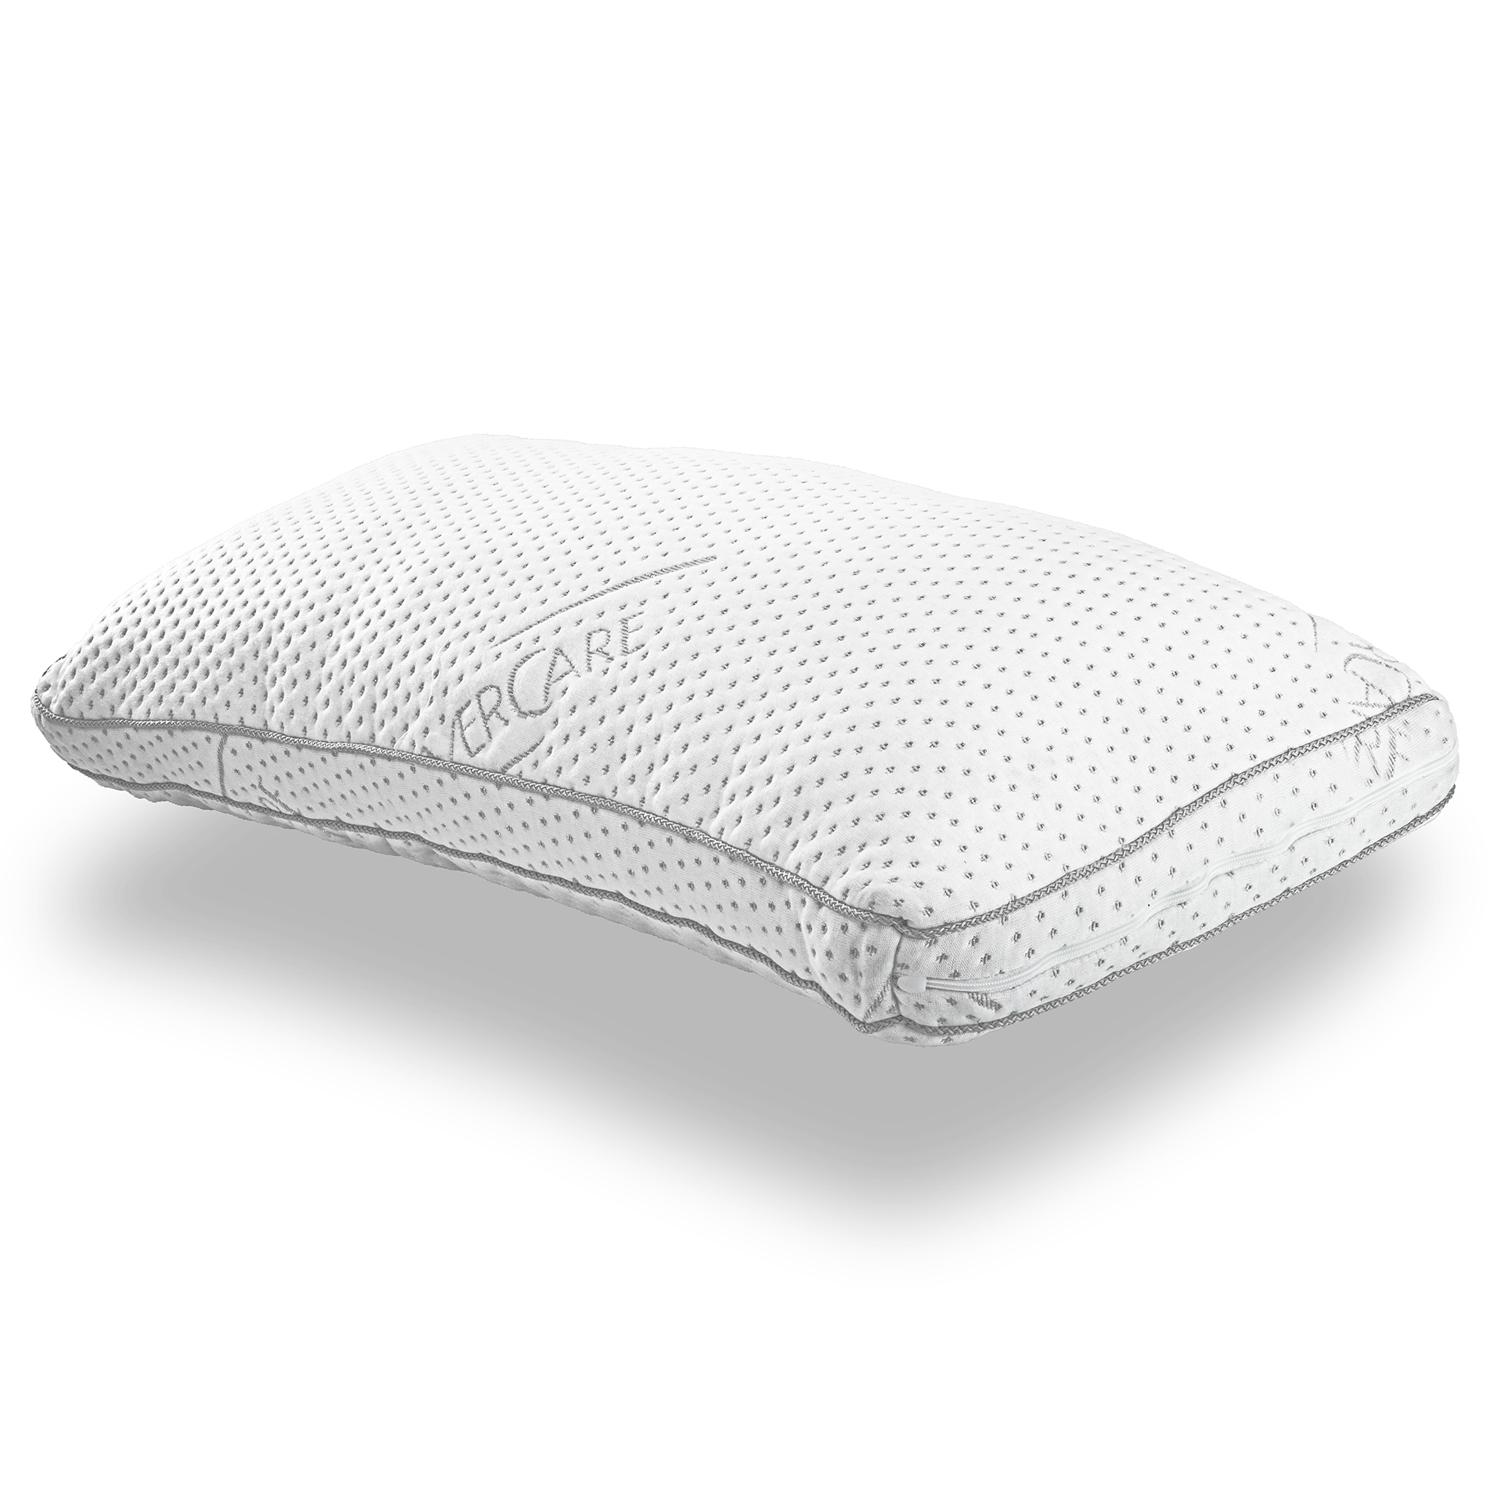 Cuscino per dormire Supportho viscoelastico comfort 40 x 80 cm